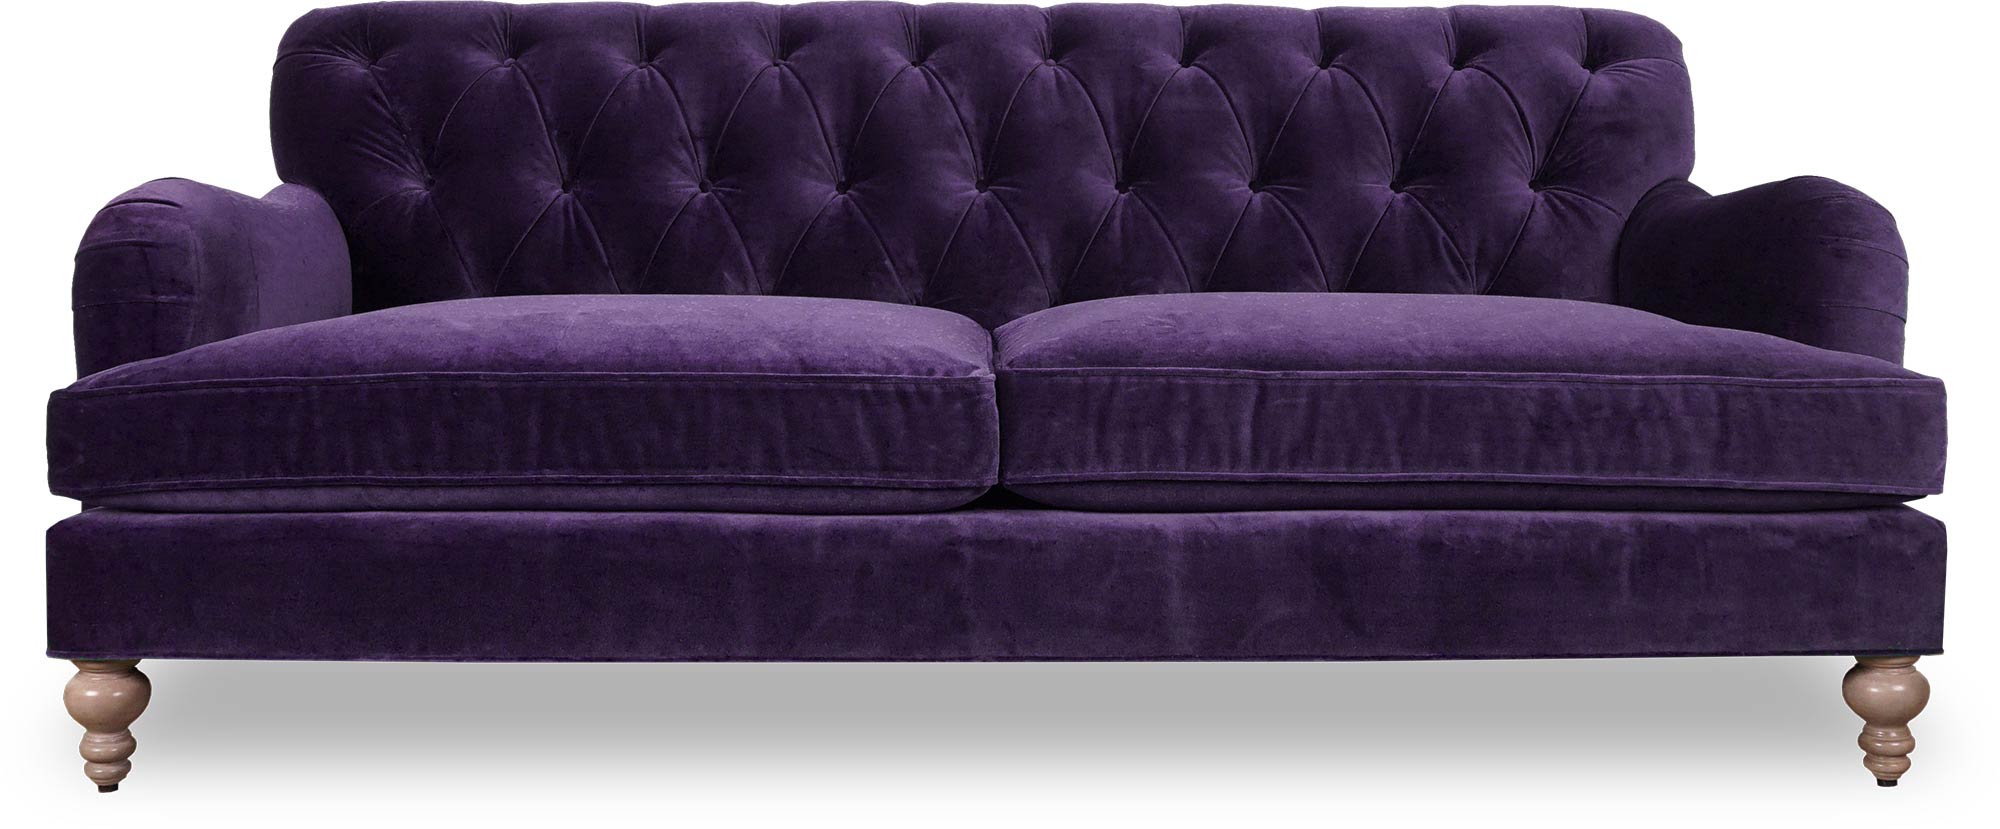 86 Alfie tufted English roll arm sofa in Como Deep Purple velvet